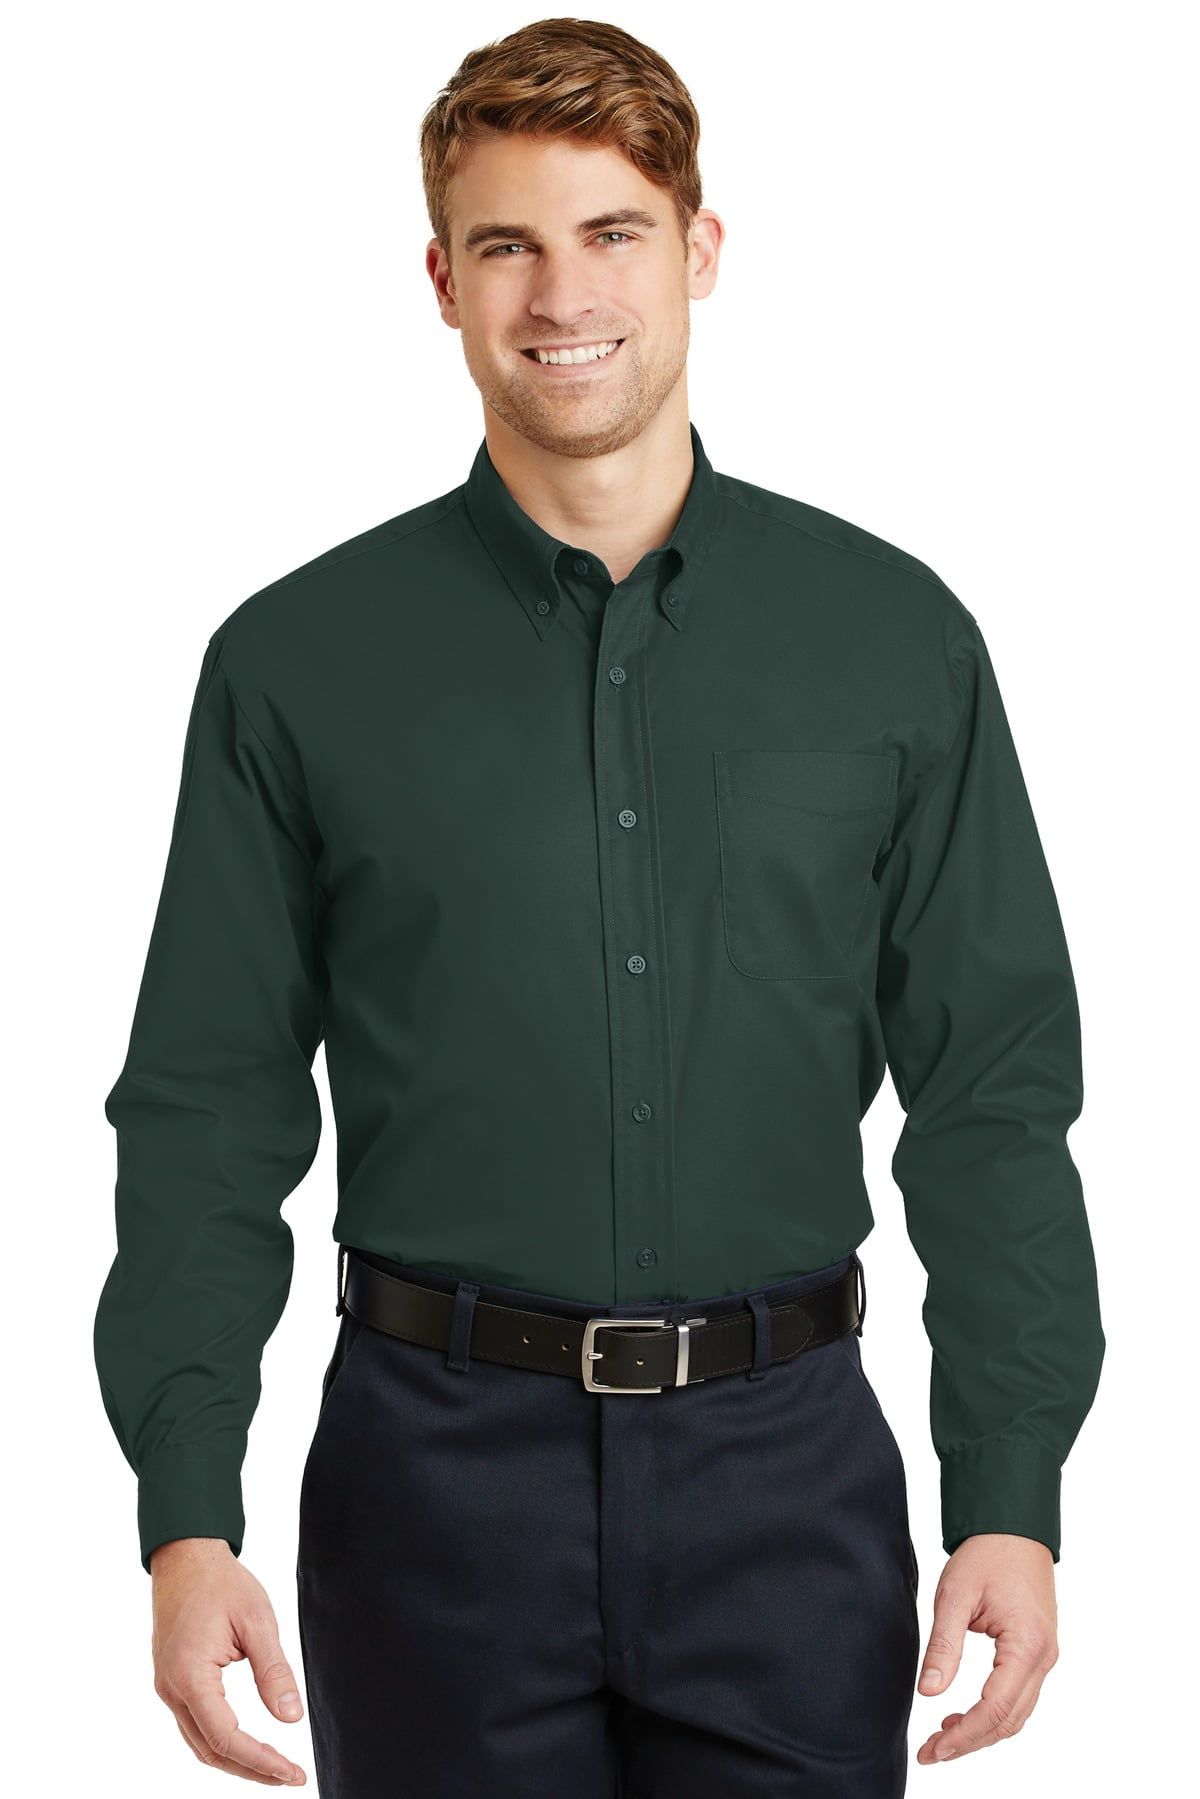 CornerStone Mens Long Sleeve Chest Pocket Shirt SP17 - Walmart.com